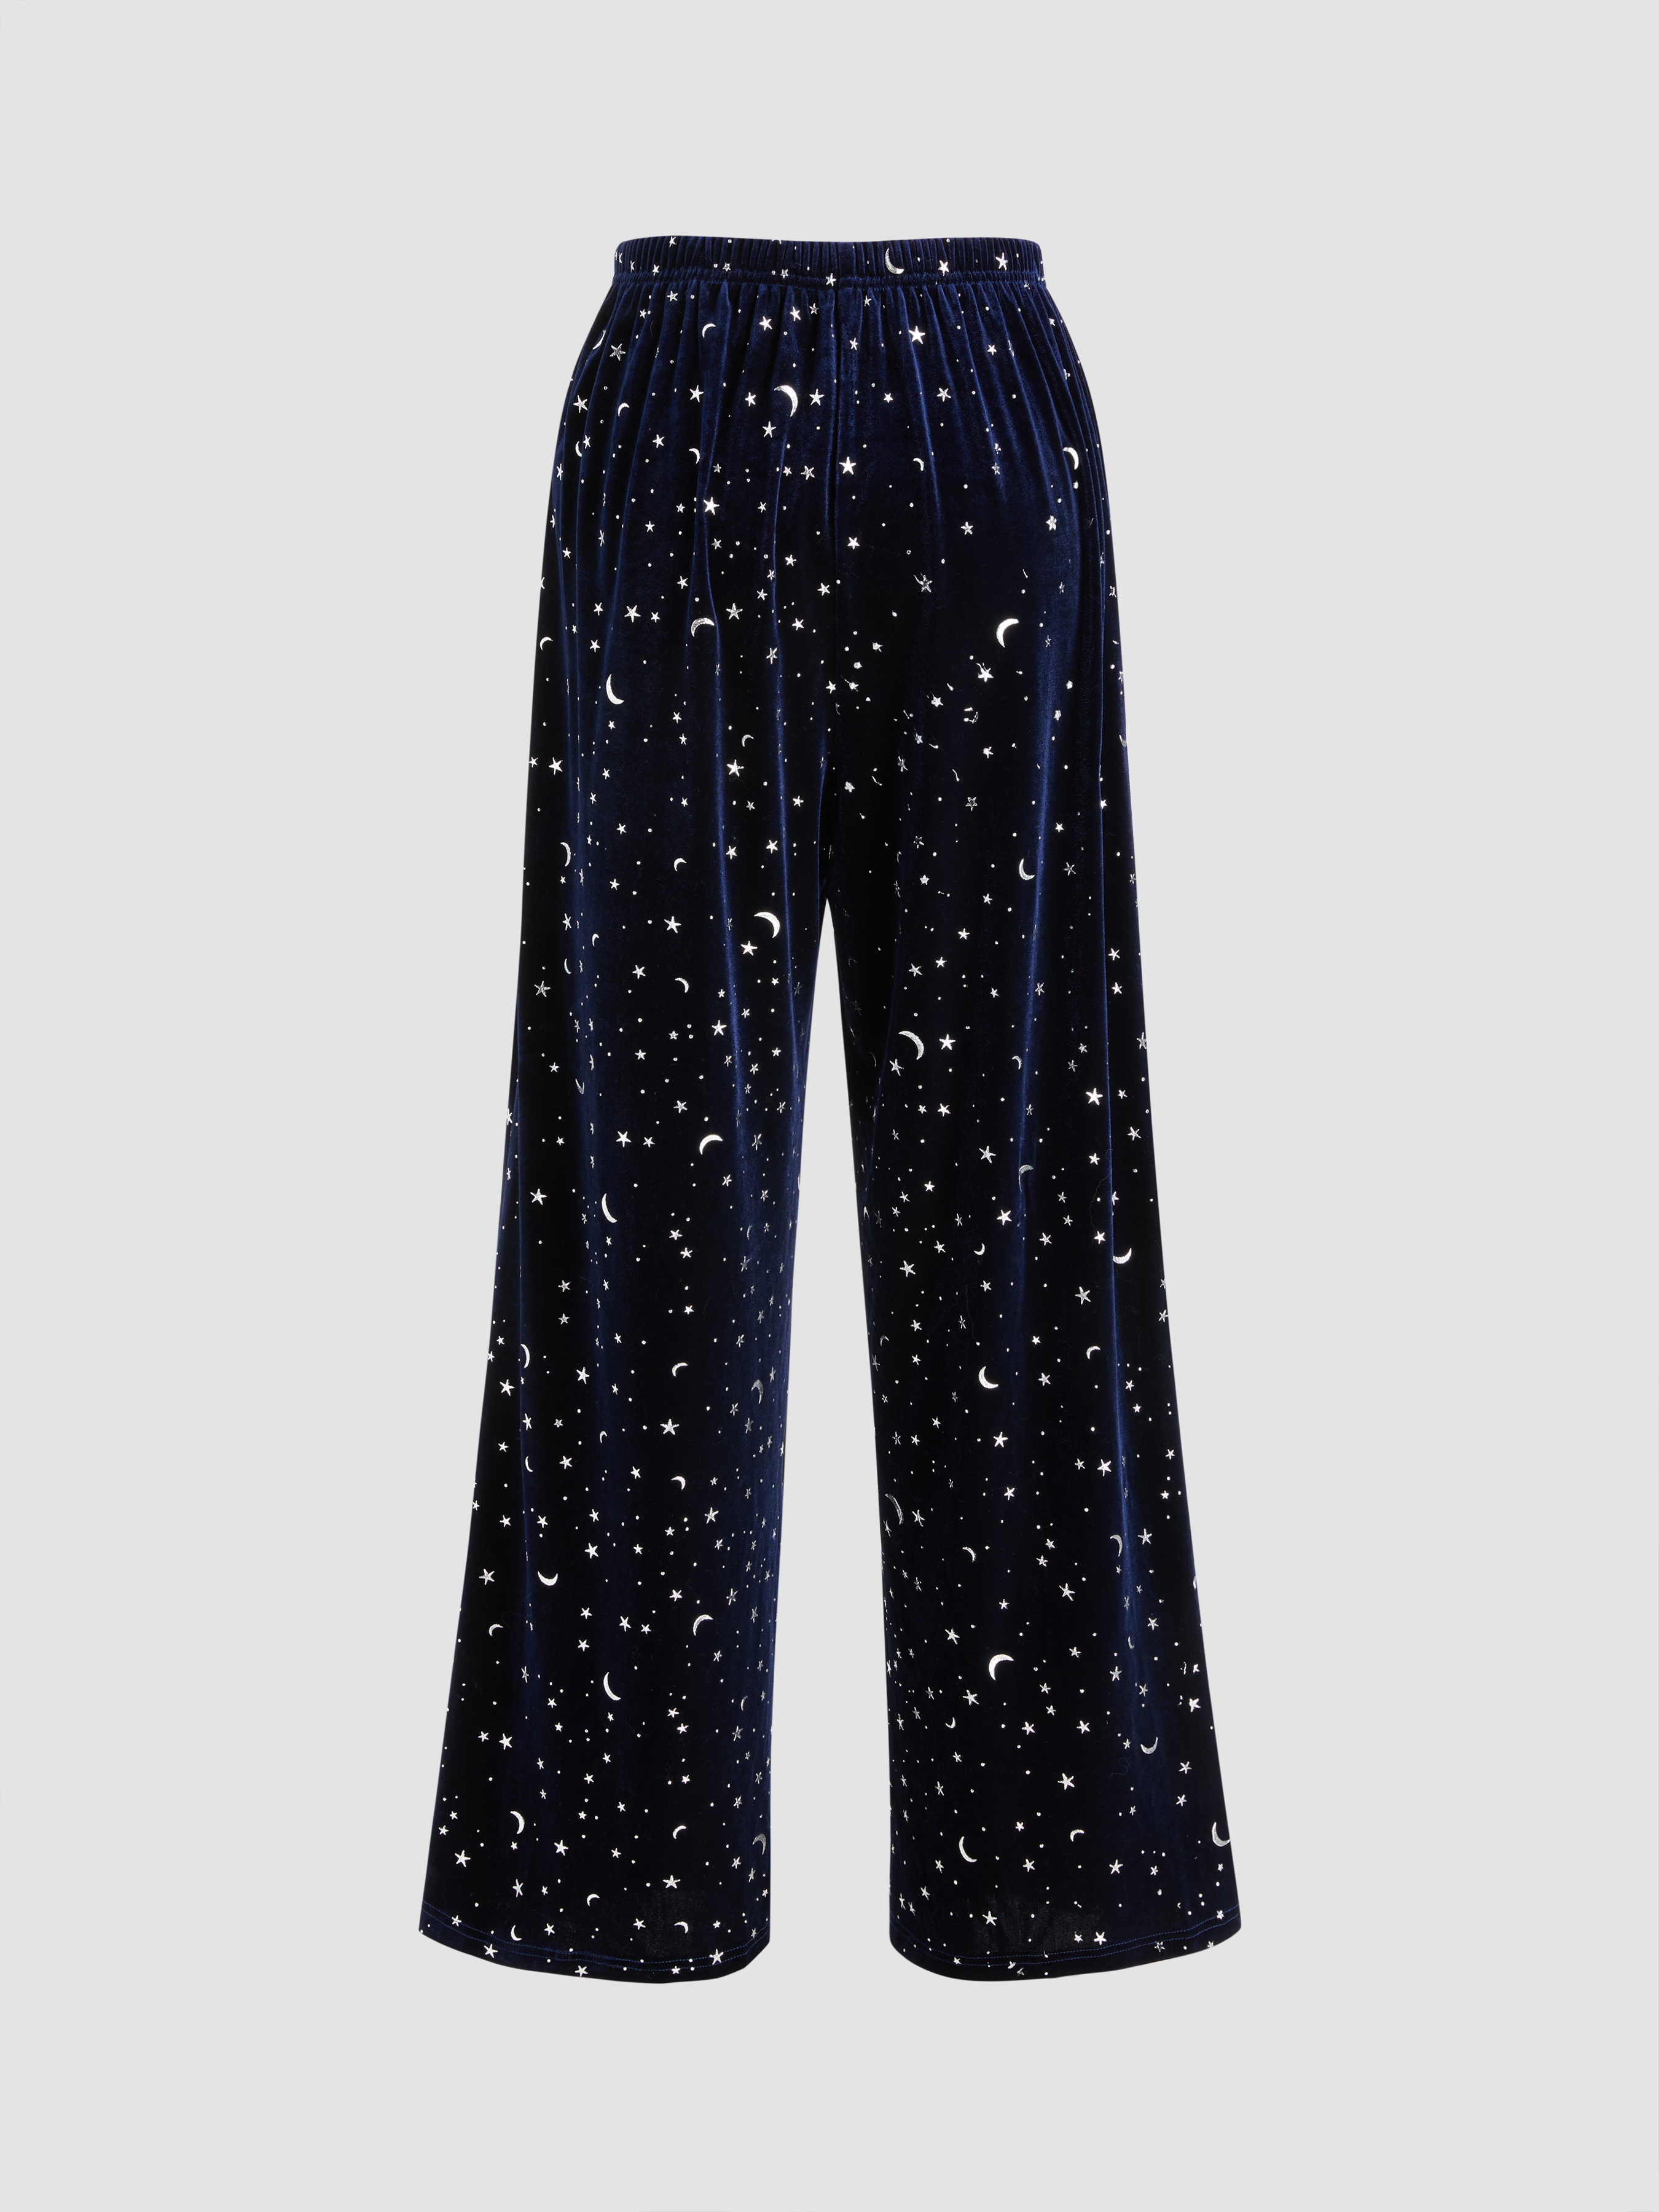 Oarencol Star Moon Space Galaxy Women's Pajama Pants Spacecraft